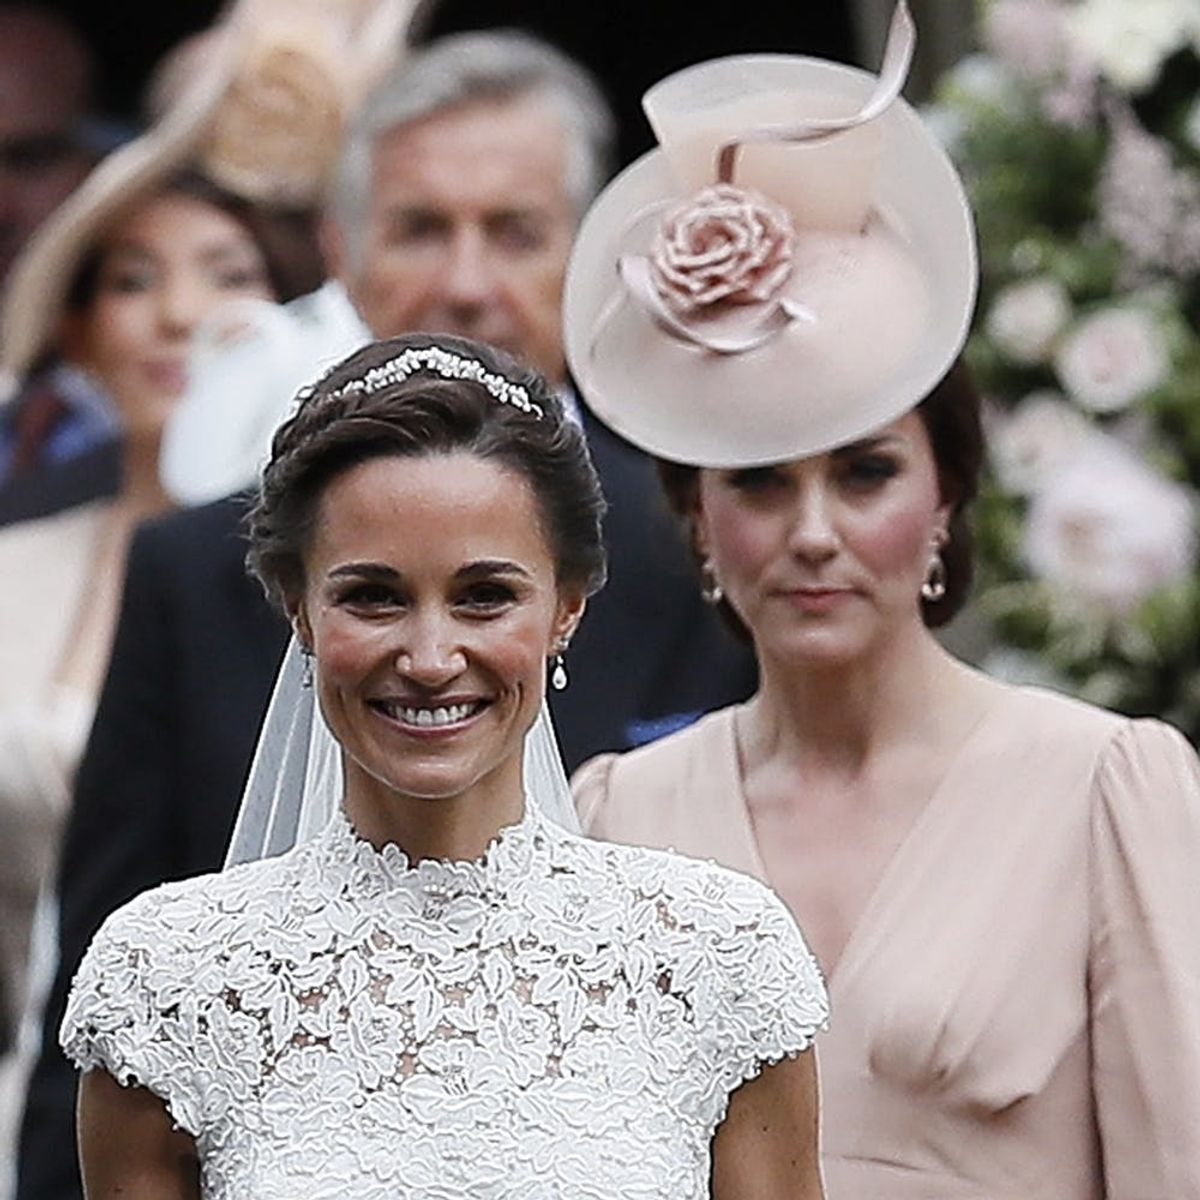 Kate Middleton Just Gave Us Major Royal Wedding Flashbacks on Her Sister’s Big Day